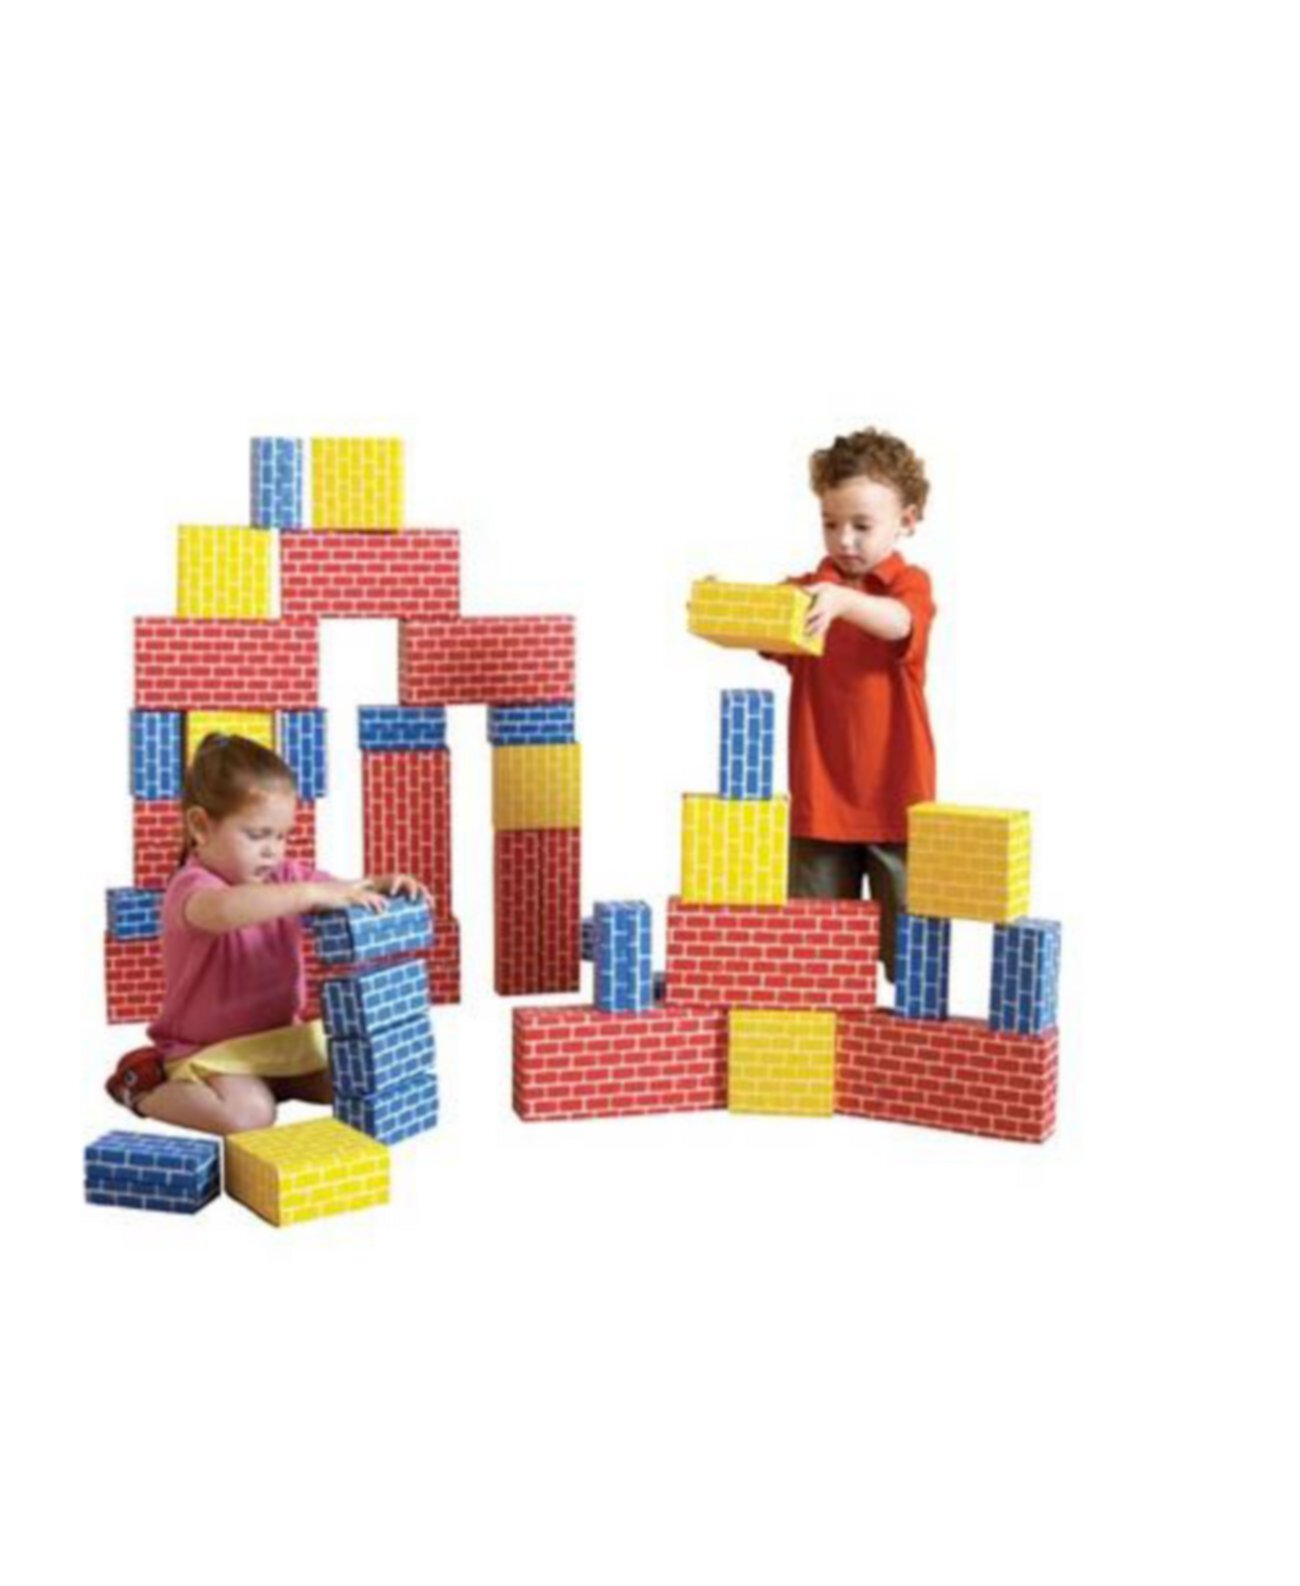 Brick block. Small Brick игрушка. Конструктор Edushape Tangram 824060 крестовые блоки. Building Toy Bricks. Pinqponq Blok large.